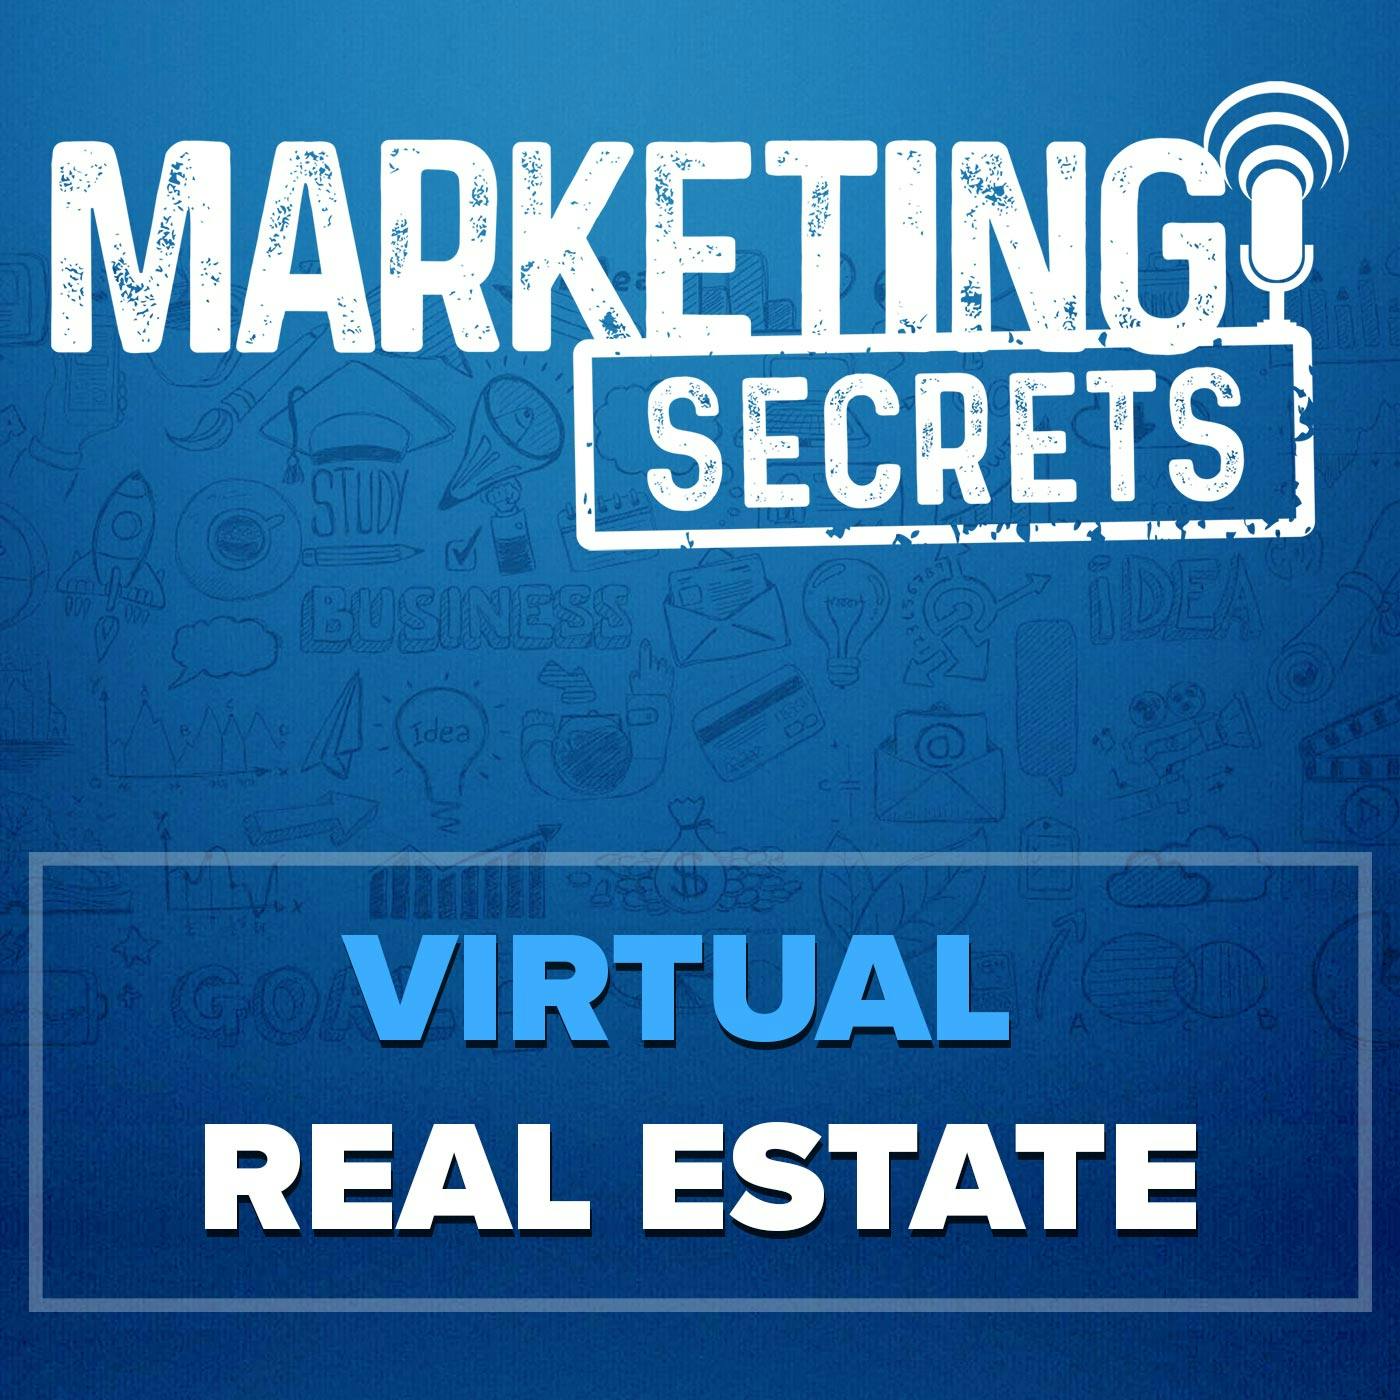 Virtual Real Estate